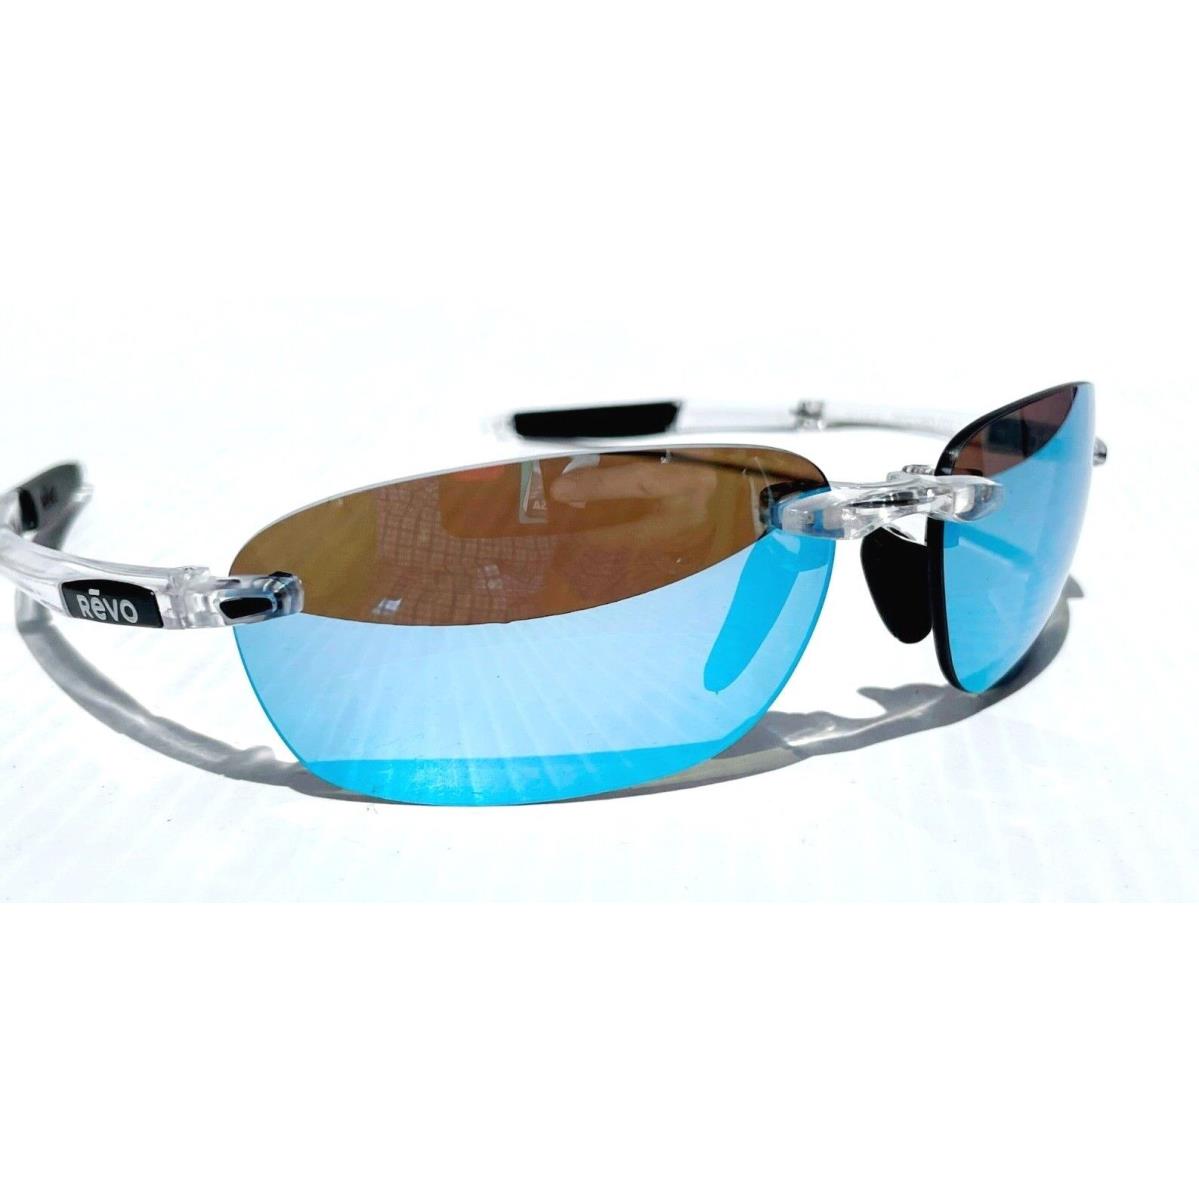 Revo sunglasses Descend Fold - Clear Frame, Blue Lens